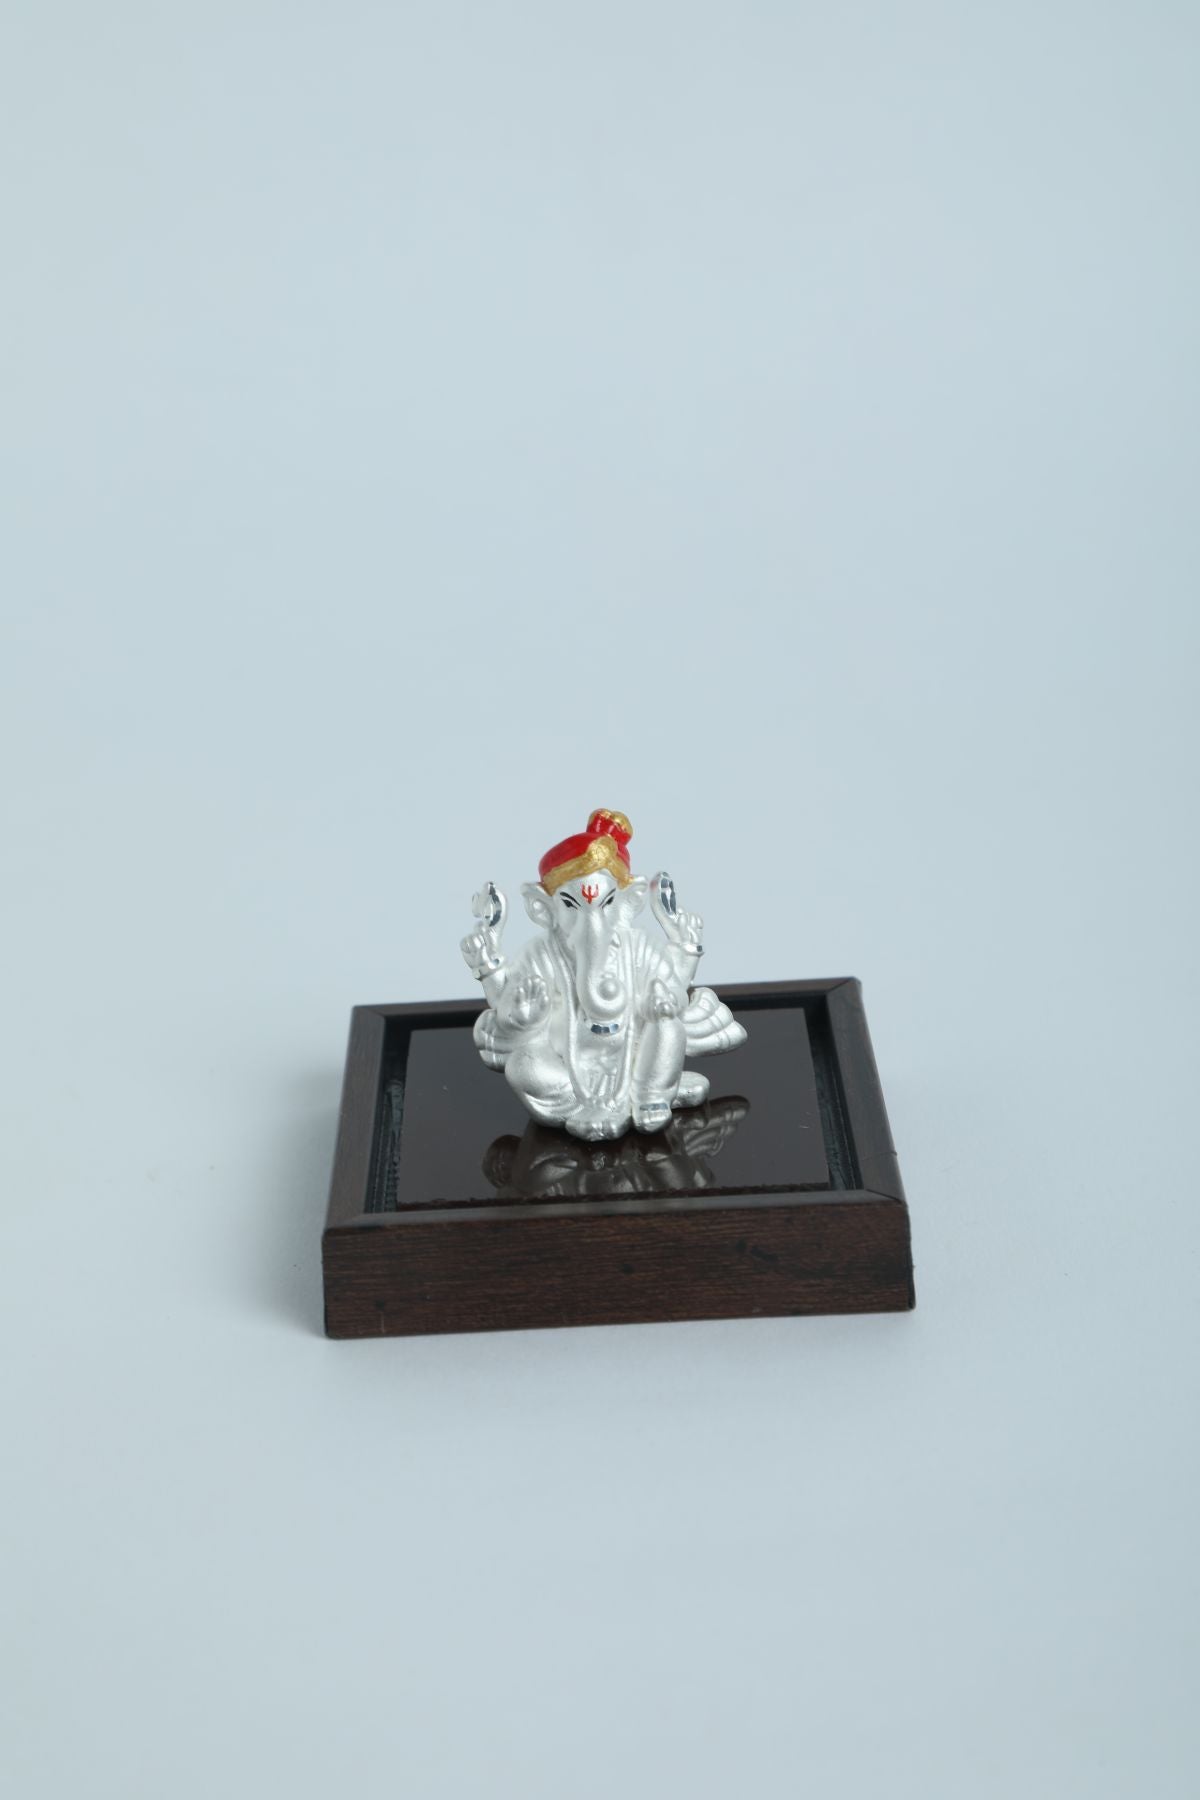 999 Pure Silver Ganesha Idol By Krysaliis Isvara - Krign_Ms20 Idols